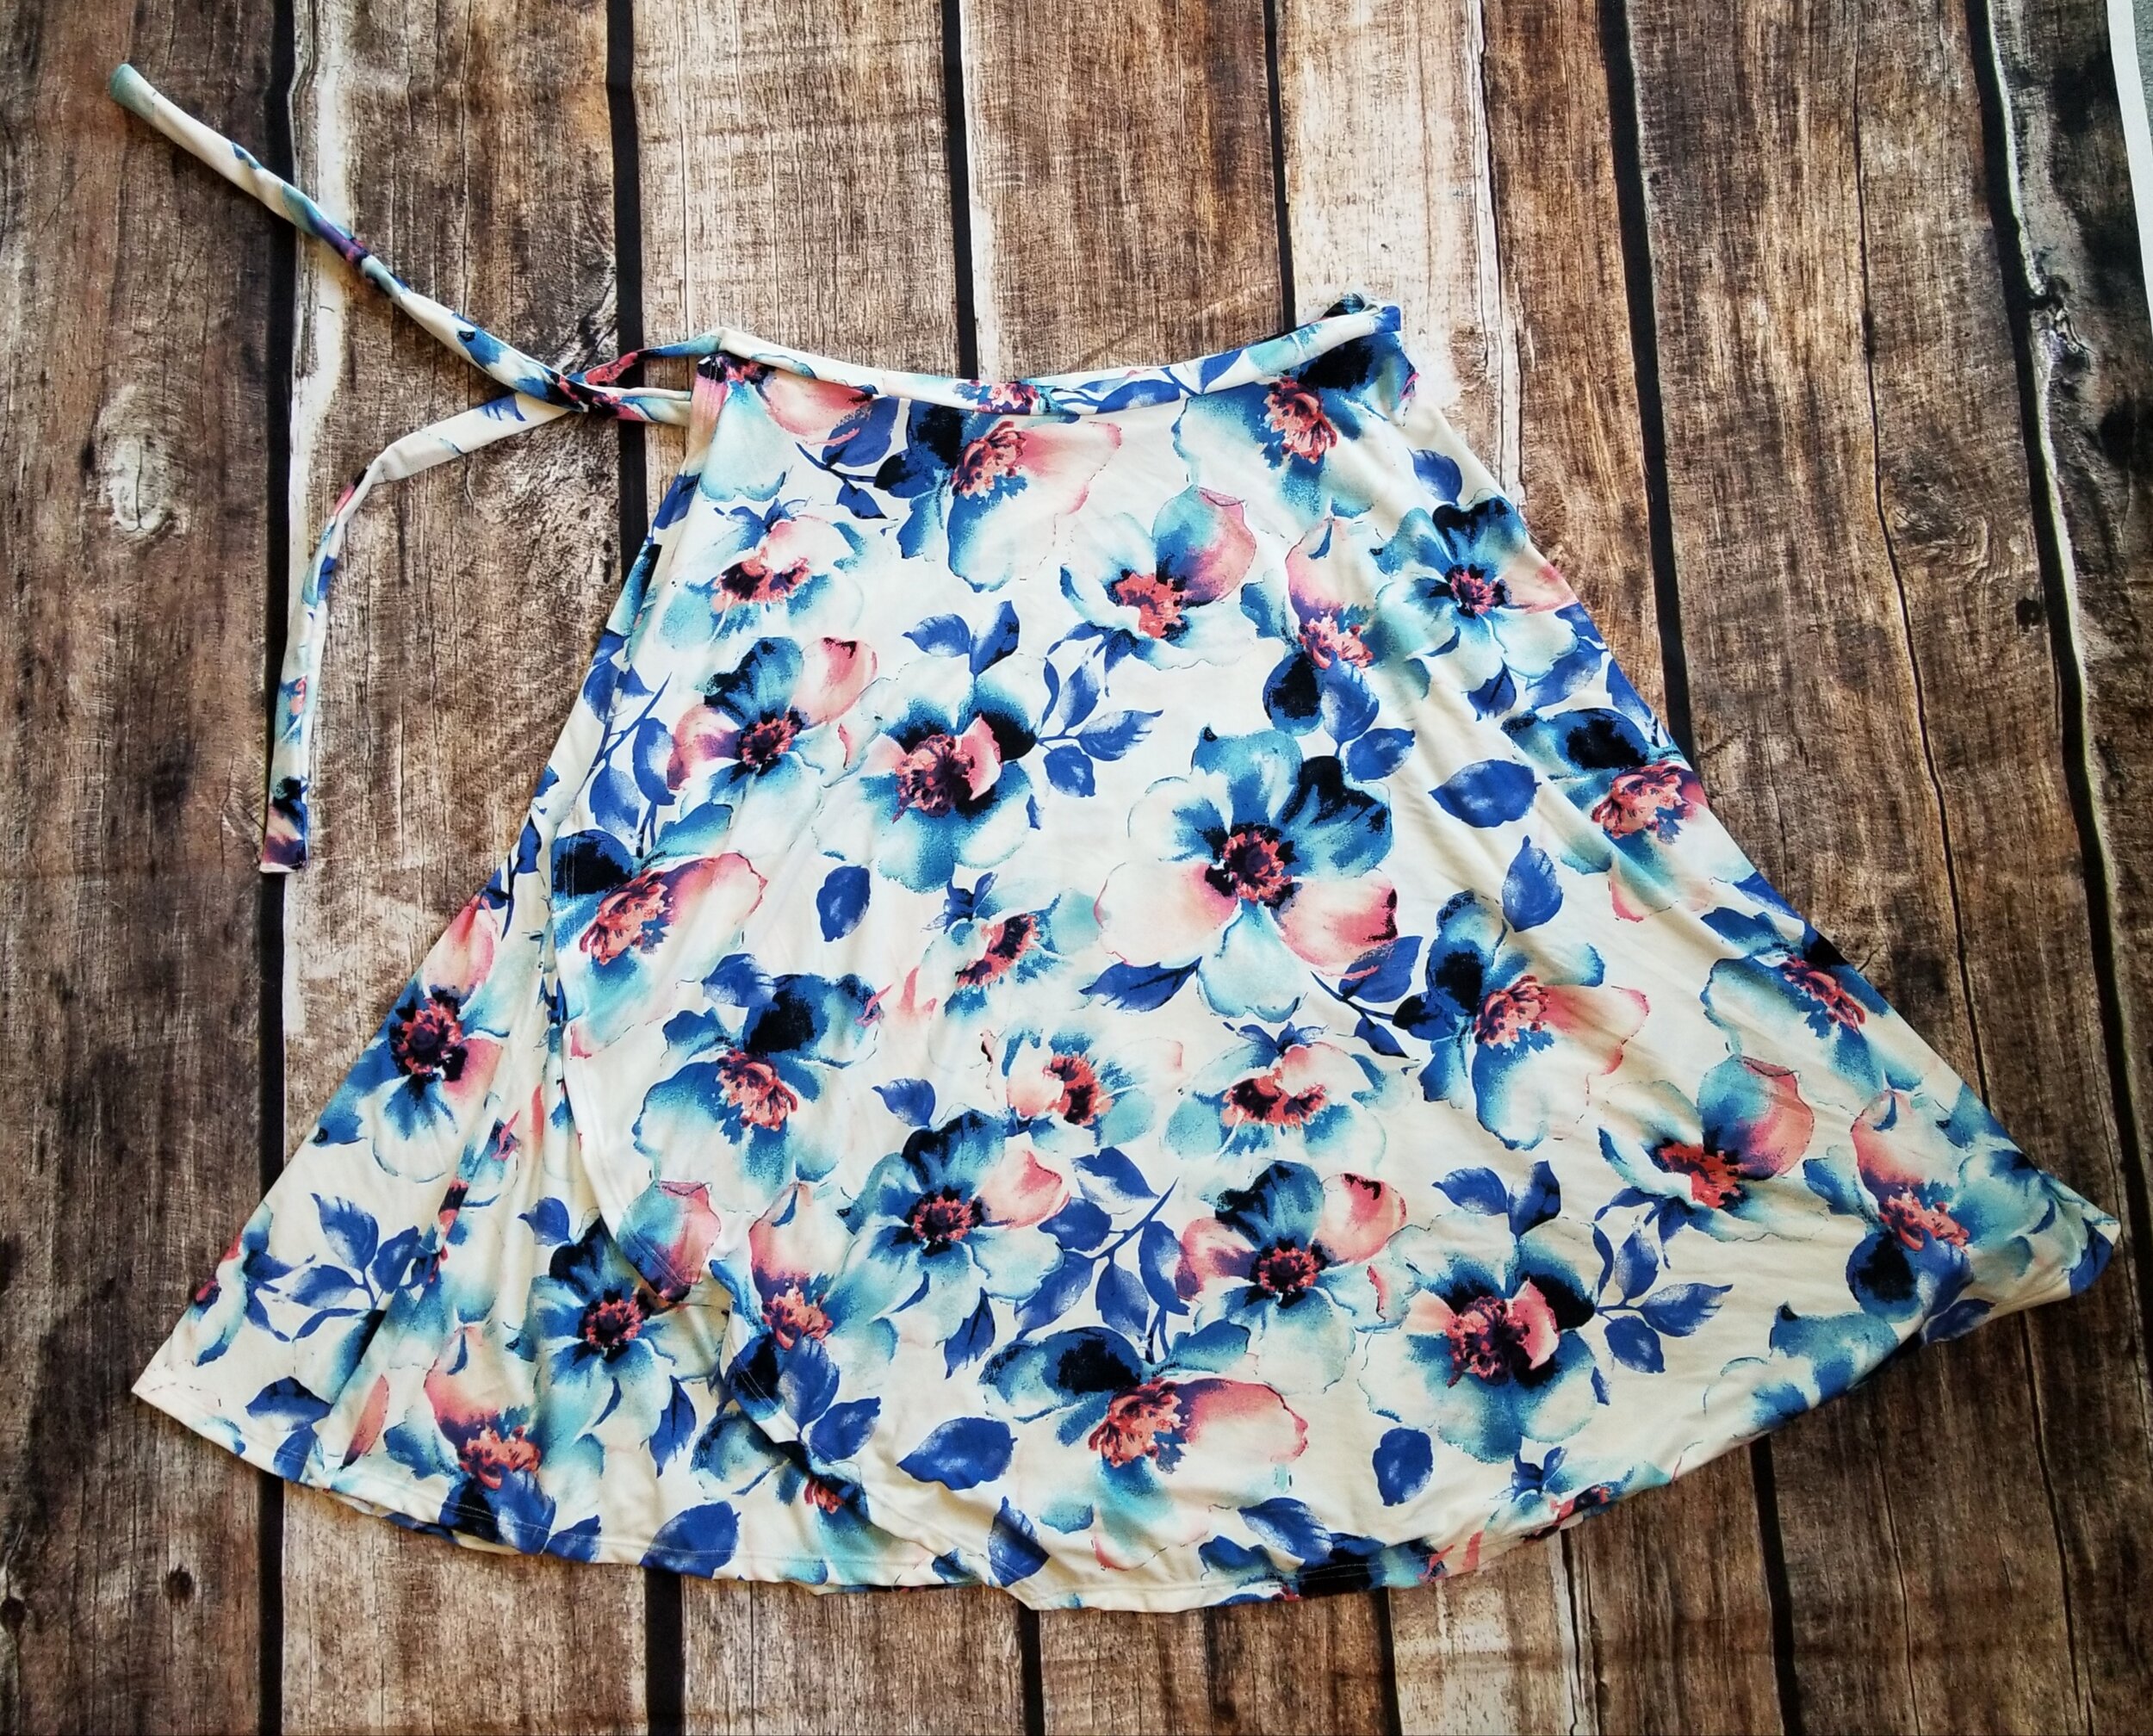 Just Skirts by Lori